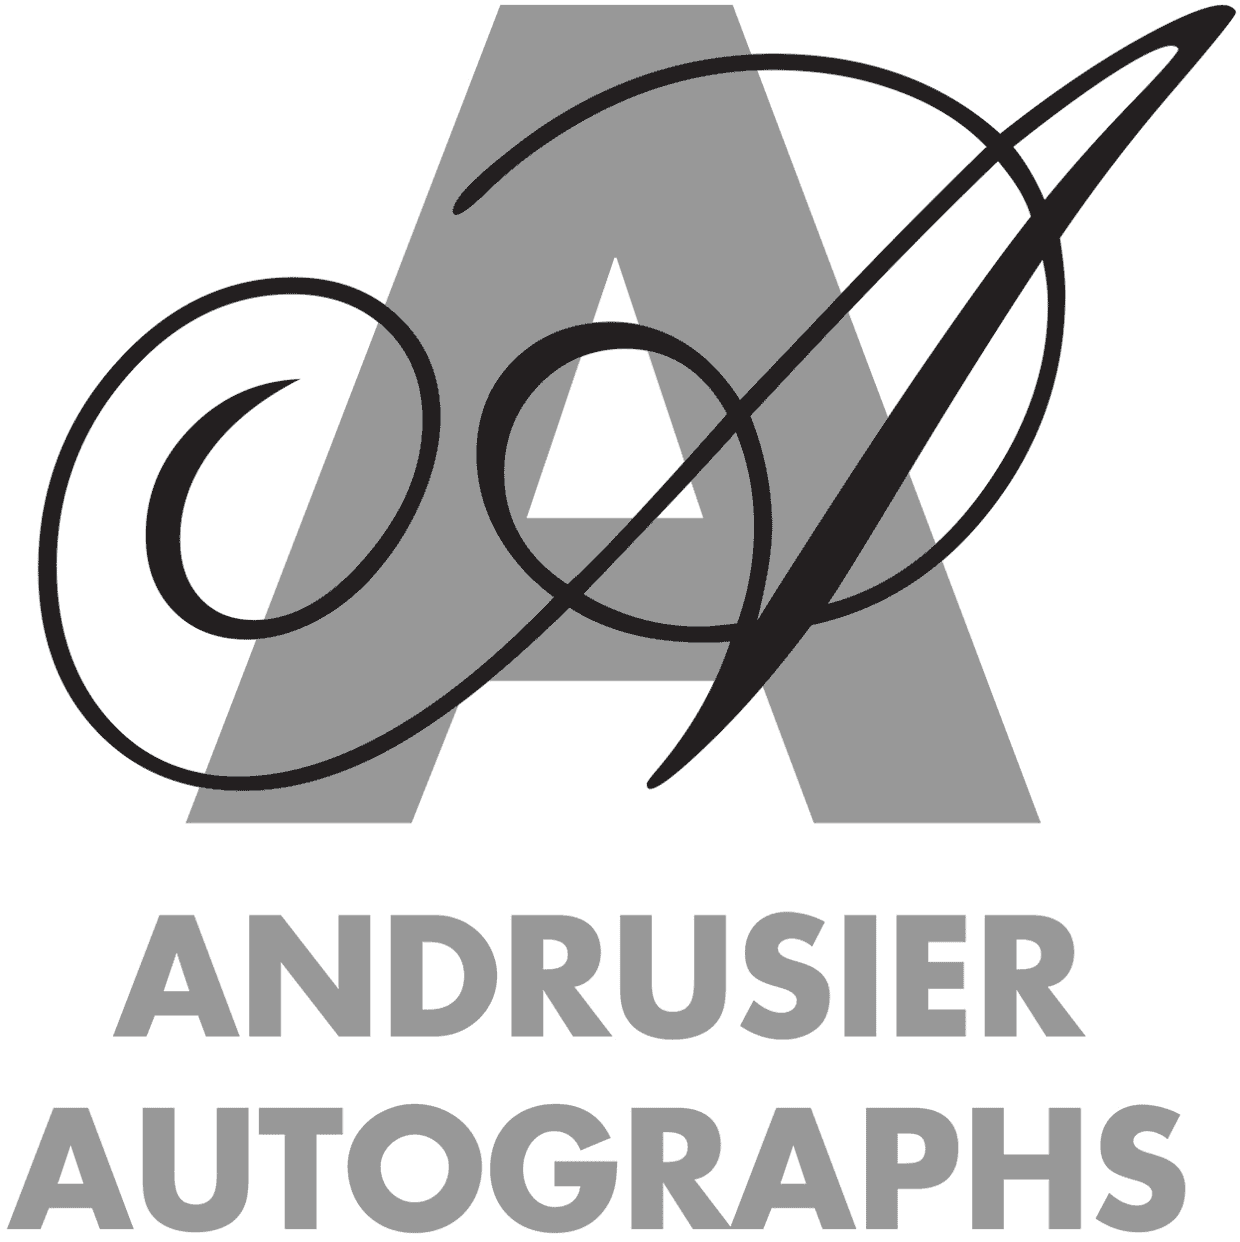 Andrusier Autographs logo designed by ideology.uk.com